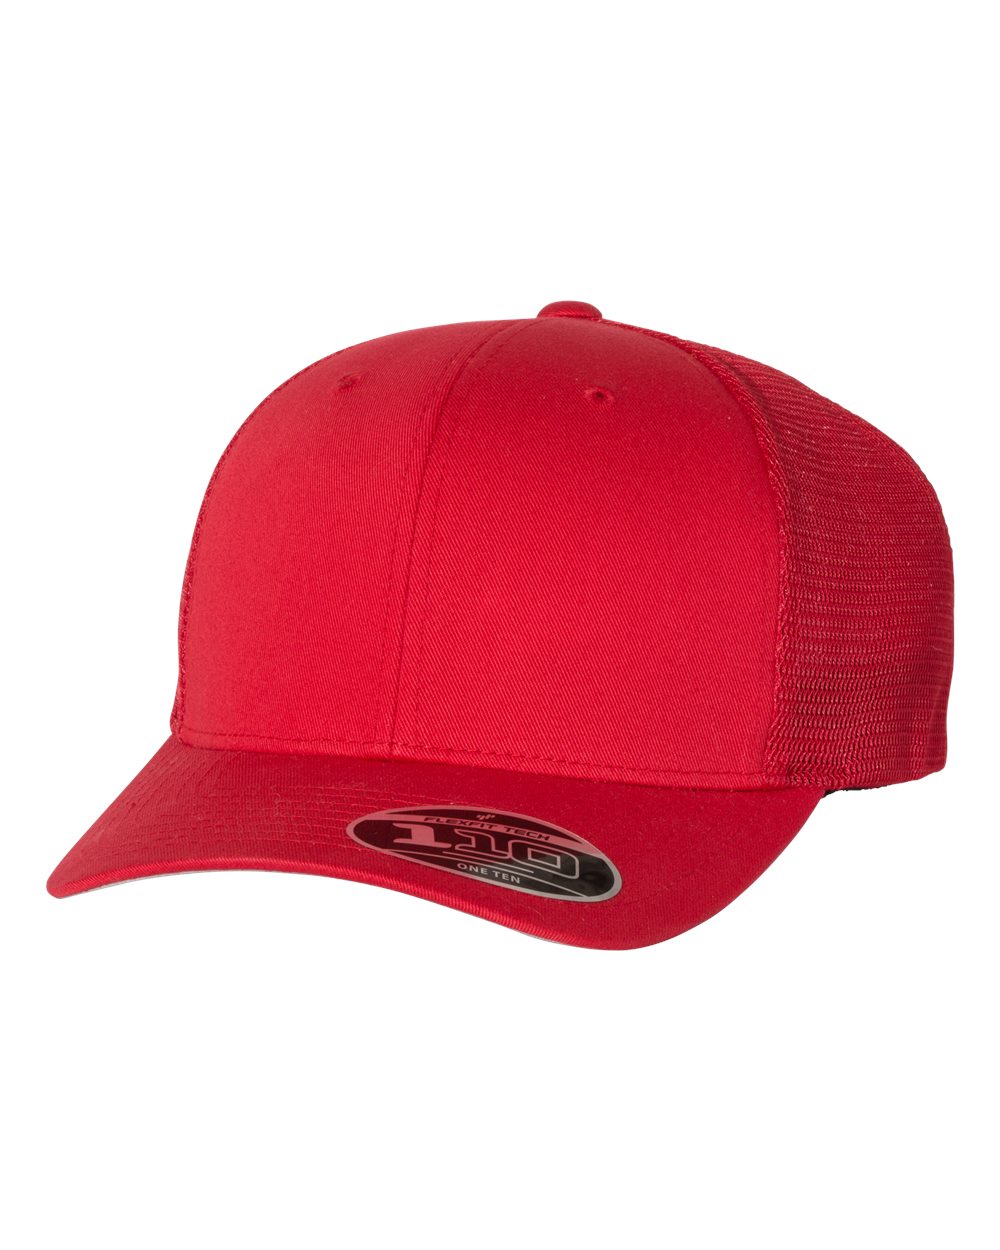 Flexfit 110M - 110® Mesh-Back Cap $7.44 - Headwear